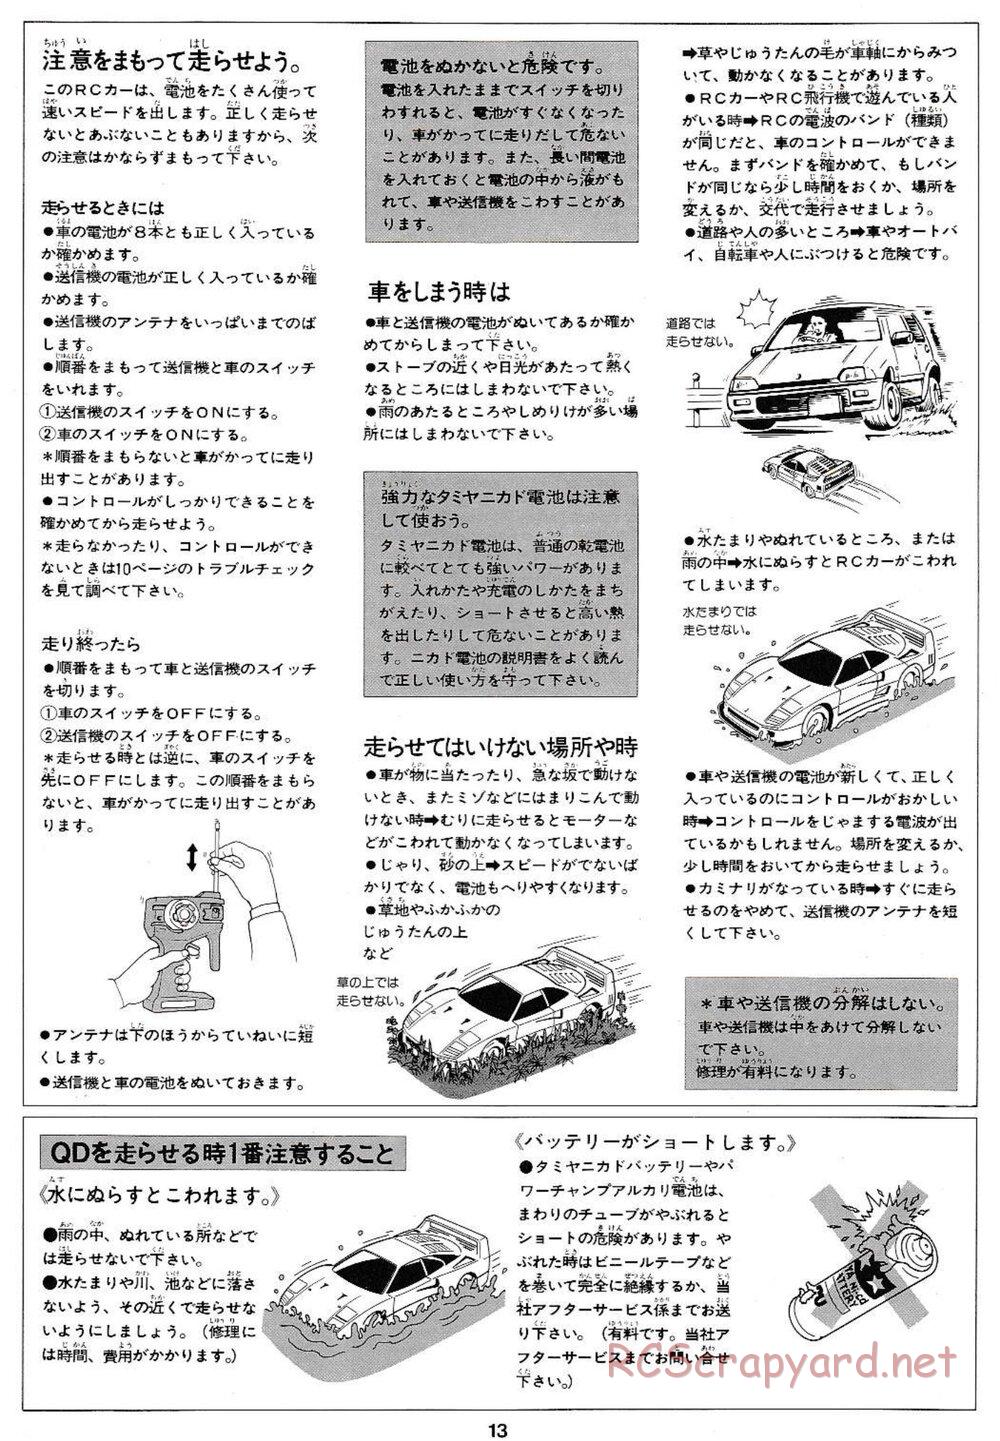 Tamiya - Ferrari F40 QD Chassis - Manual - Page 13